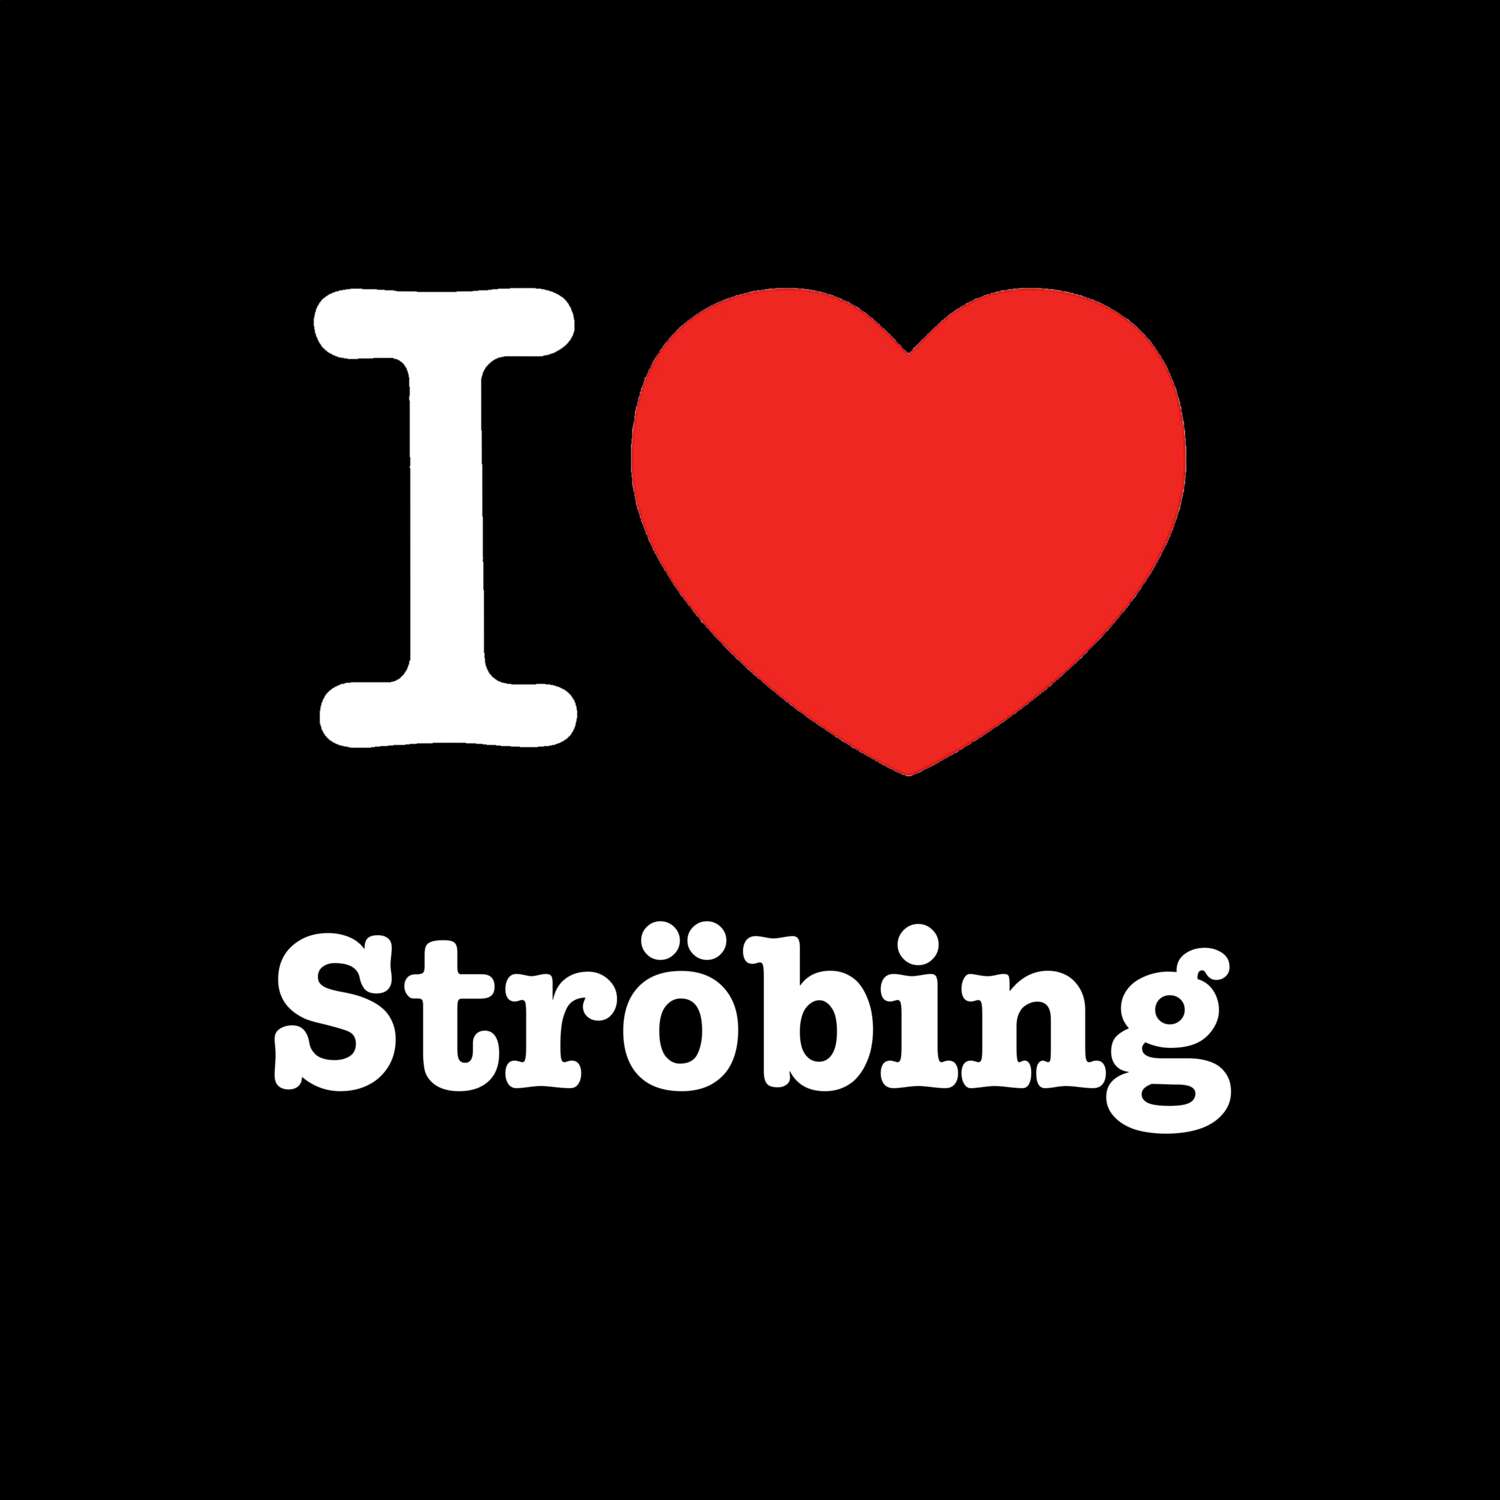 Ströbing T-Shirt »I love«